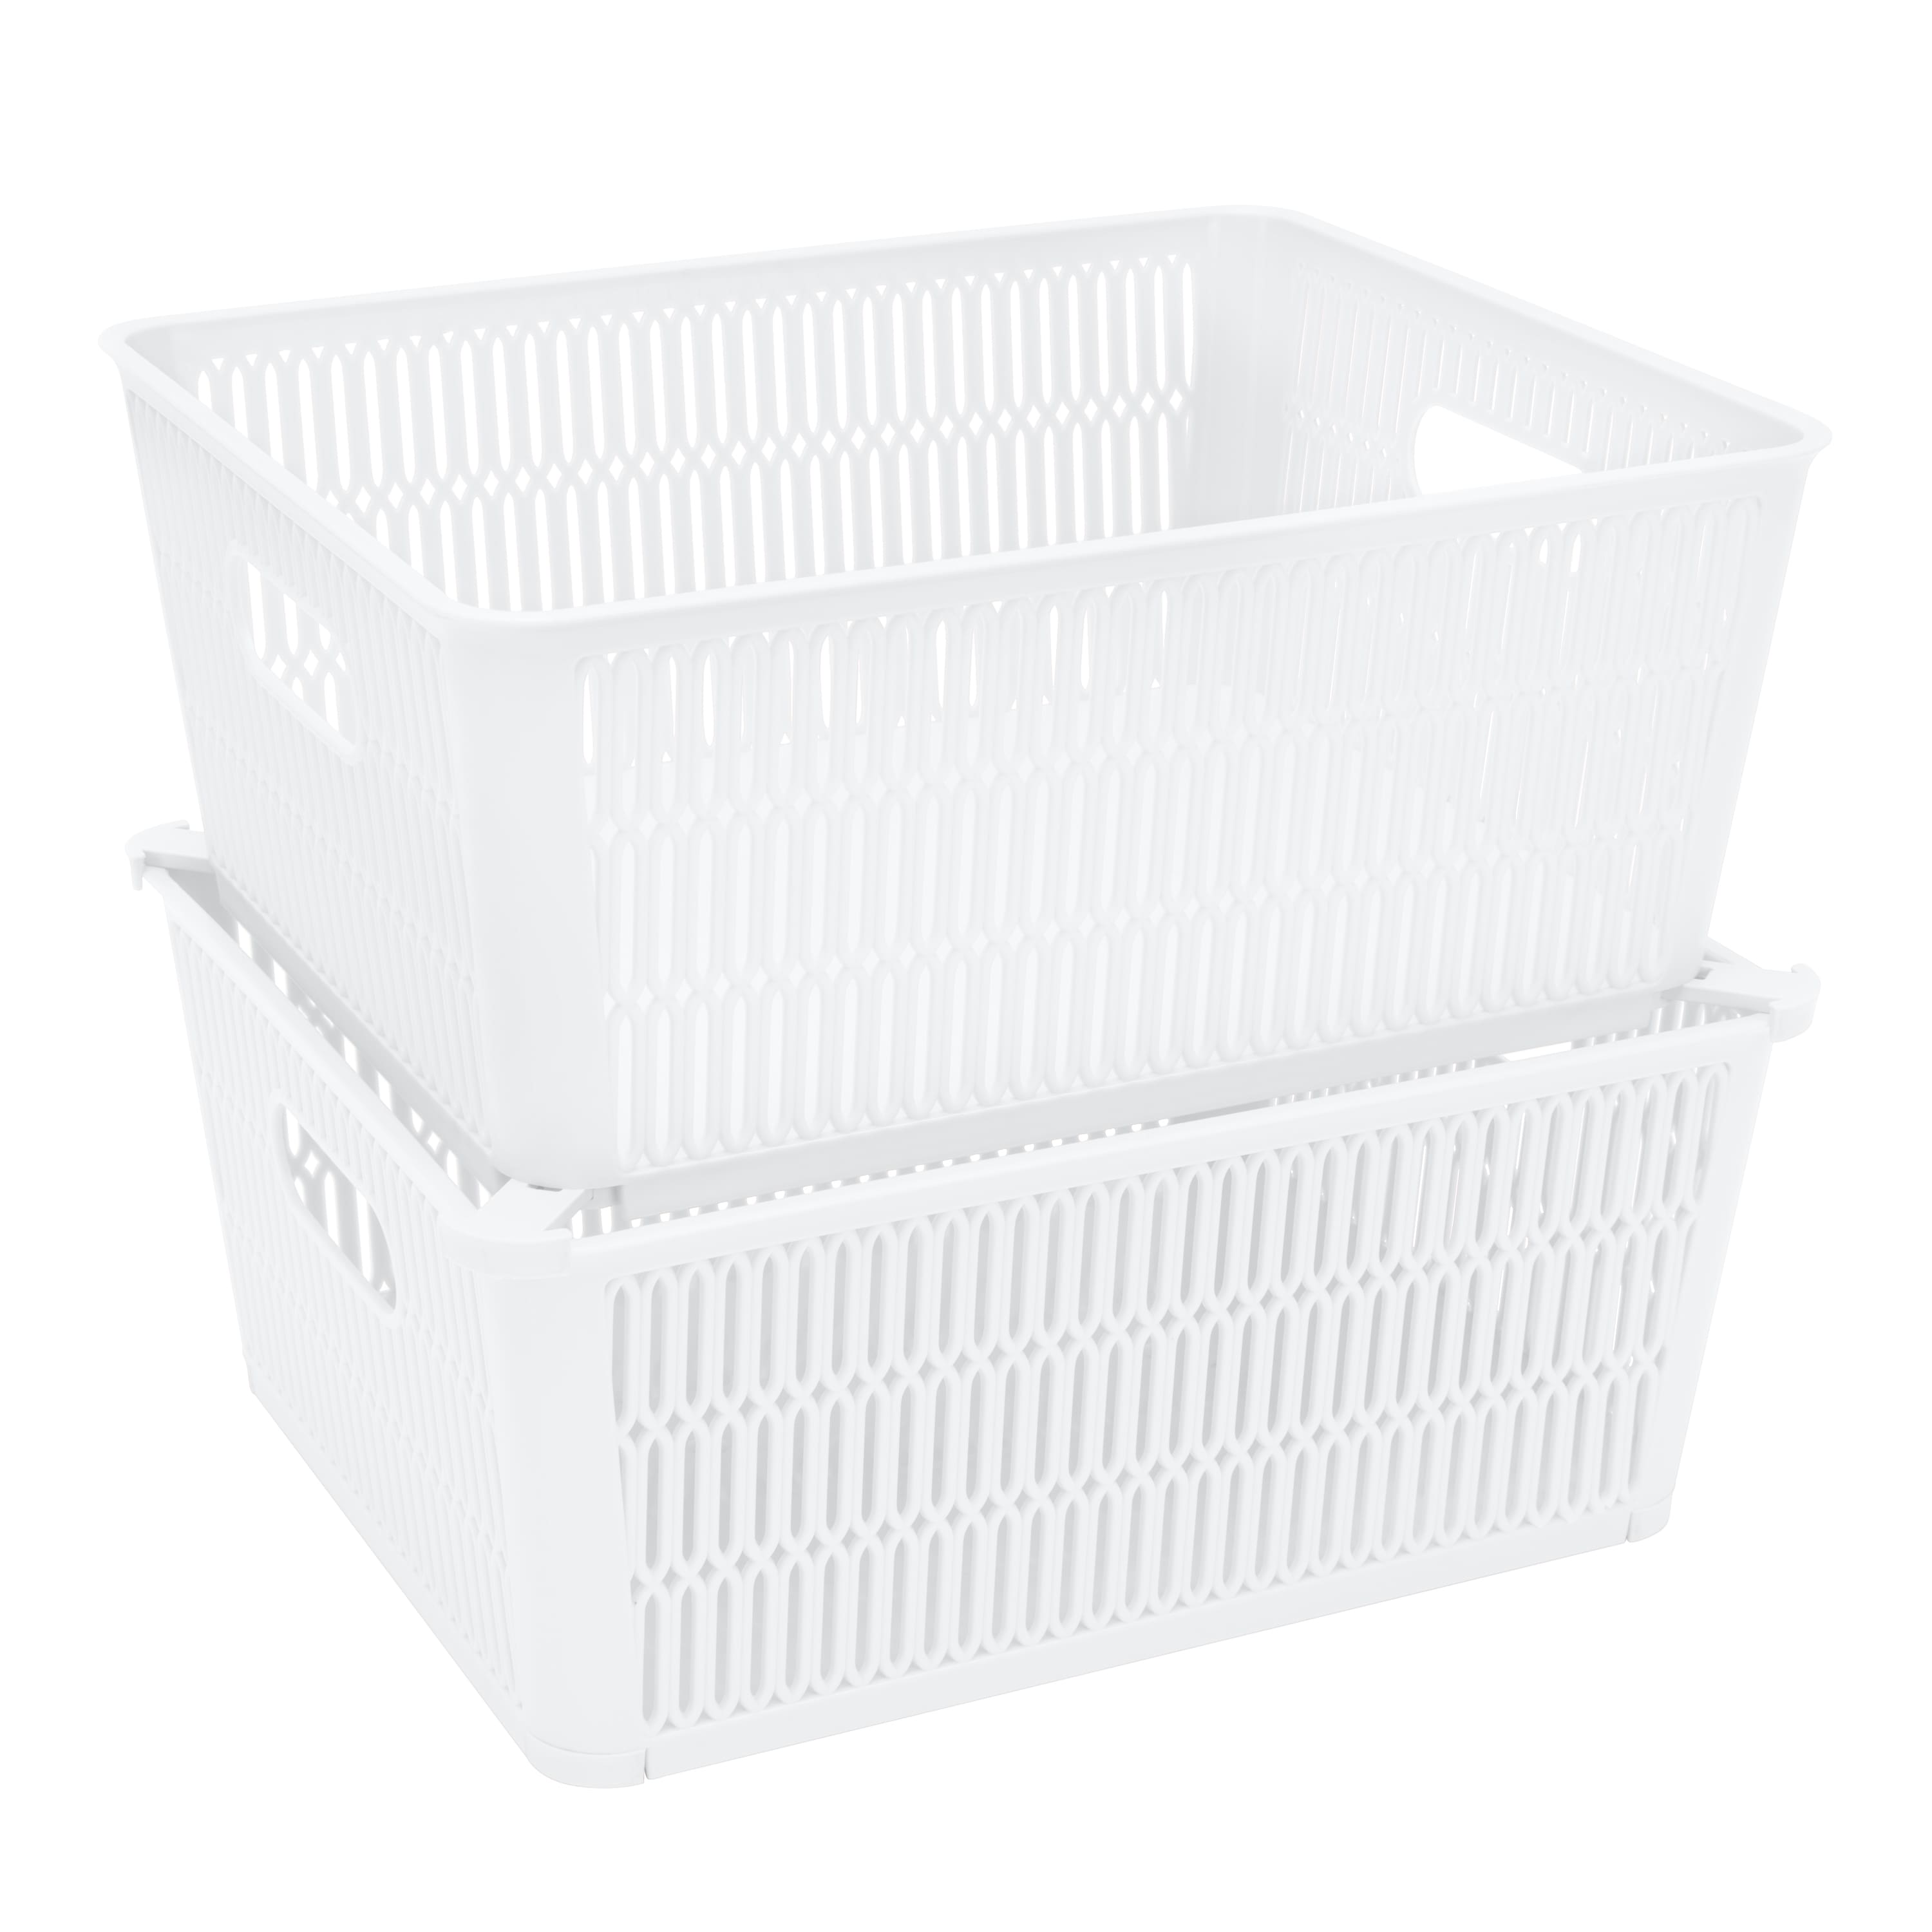 Simplify Slide-2-Stack-It Storage Tote Baskets Grey